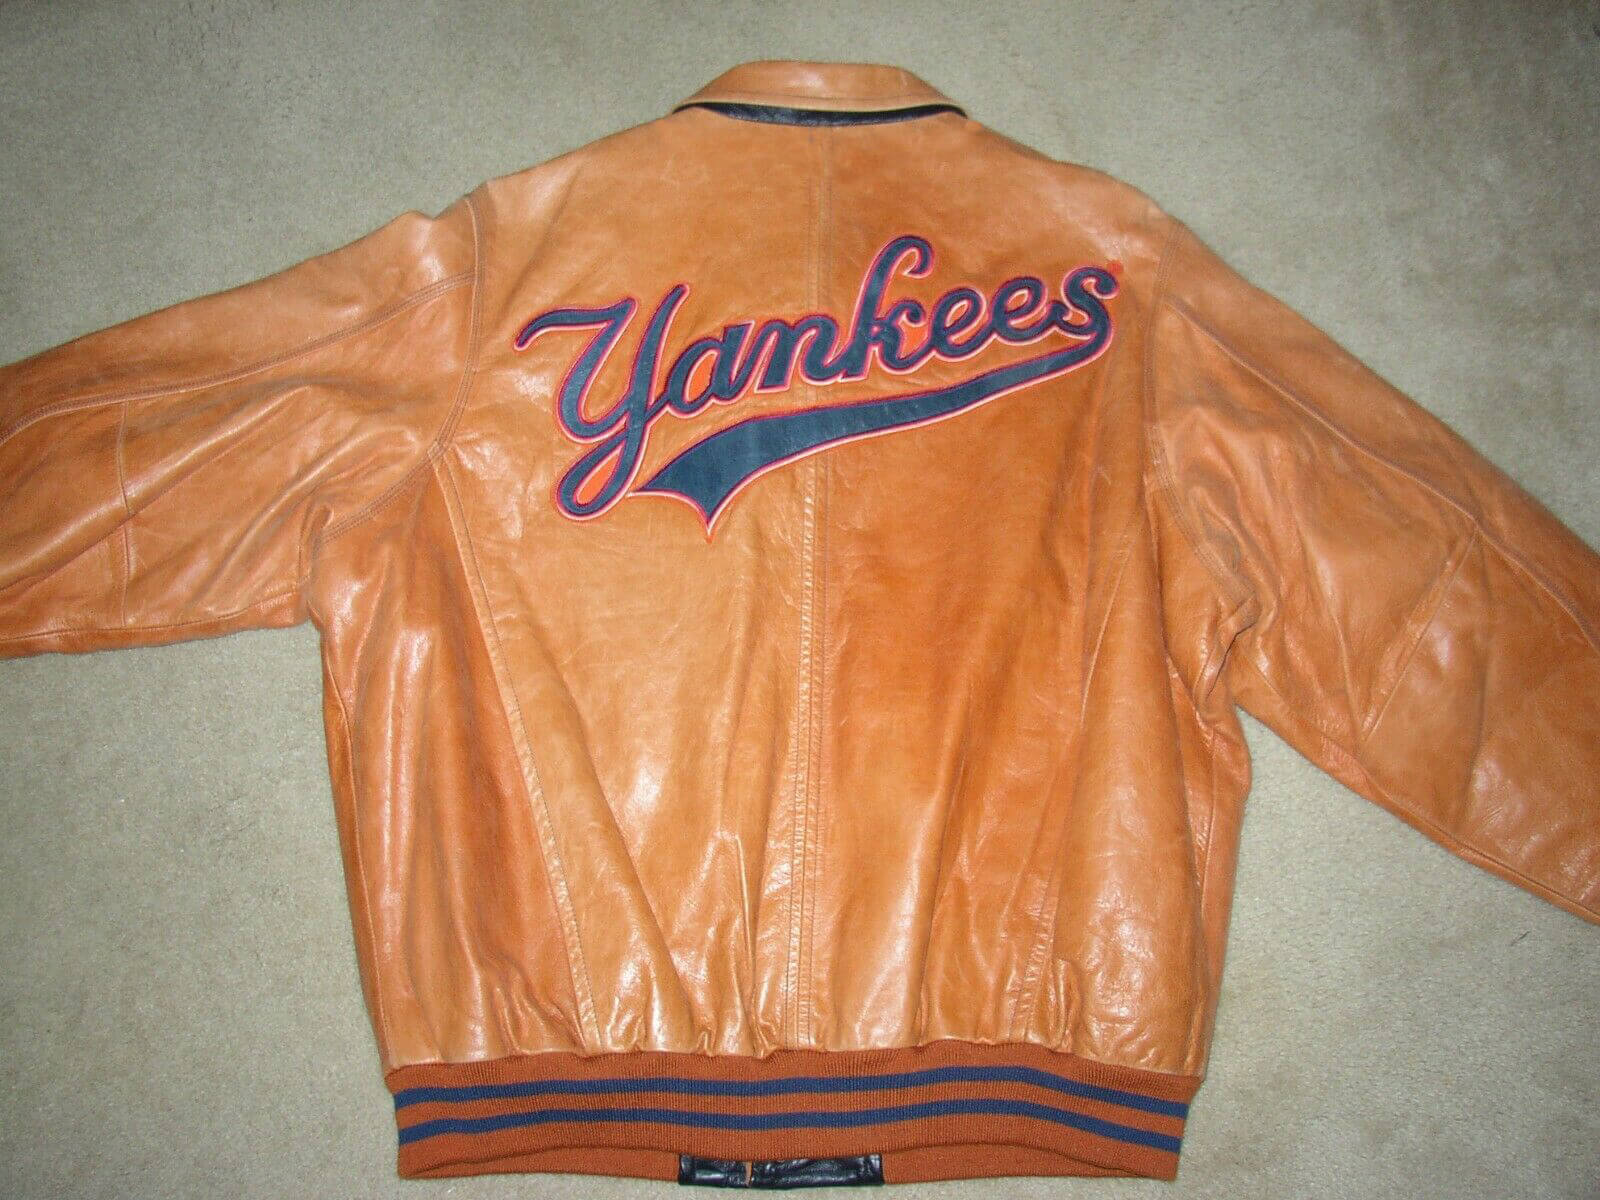 Vintage 1990's Mirage New York Yankees Leather Jacket - Maker of 